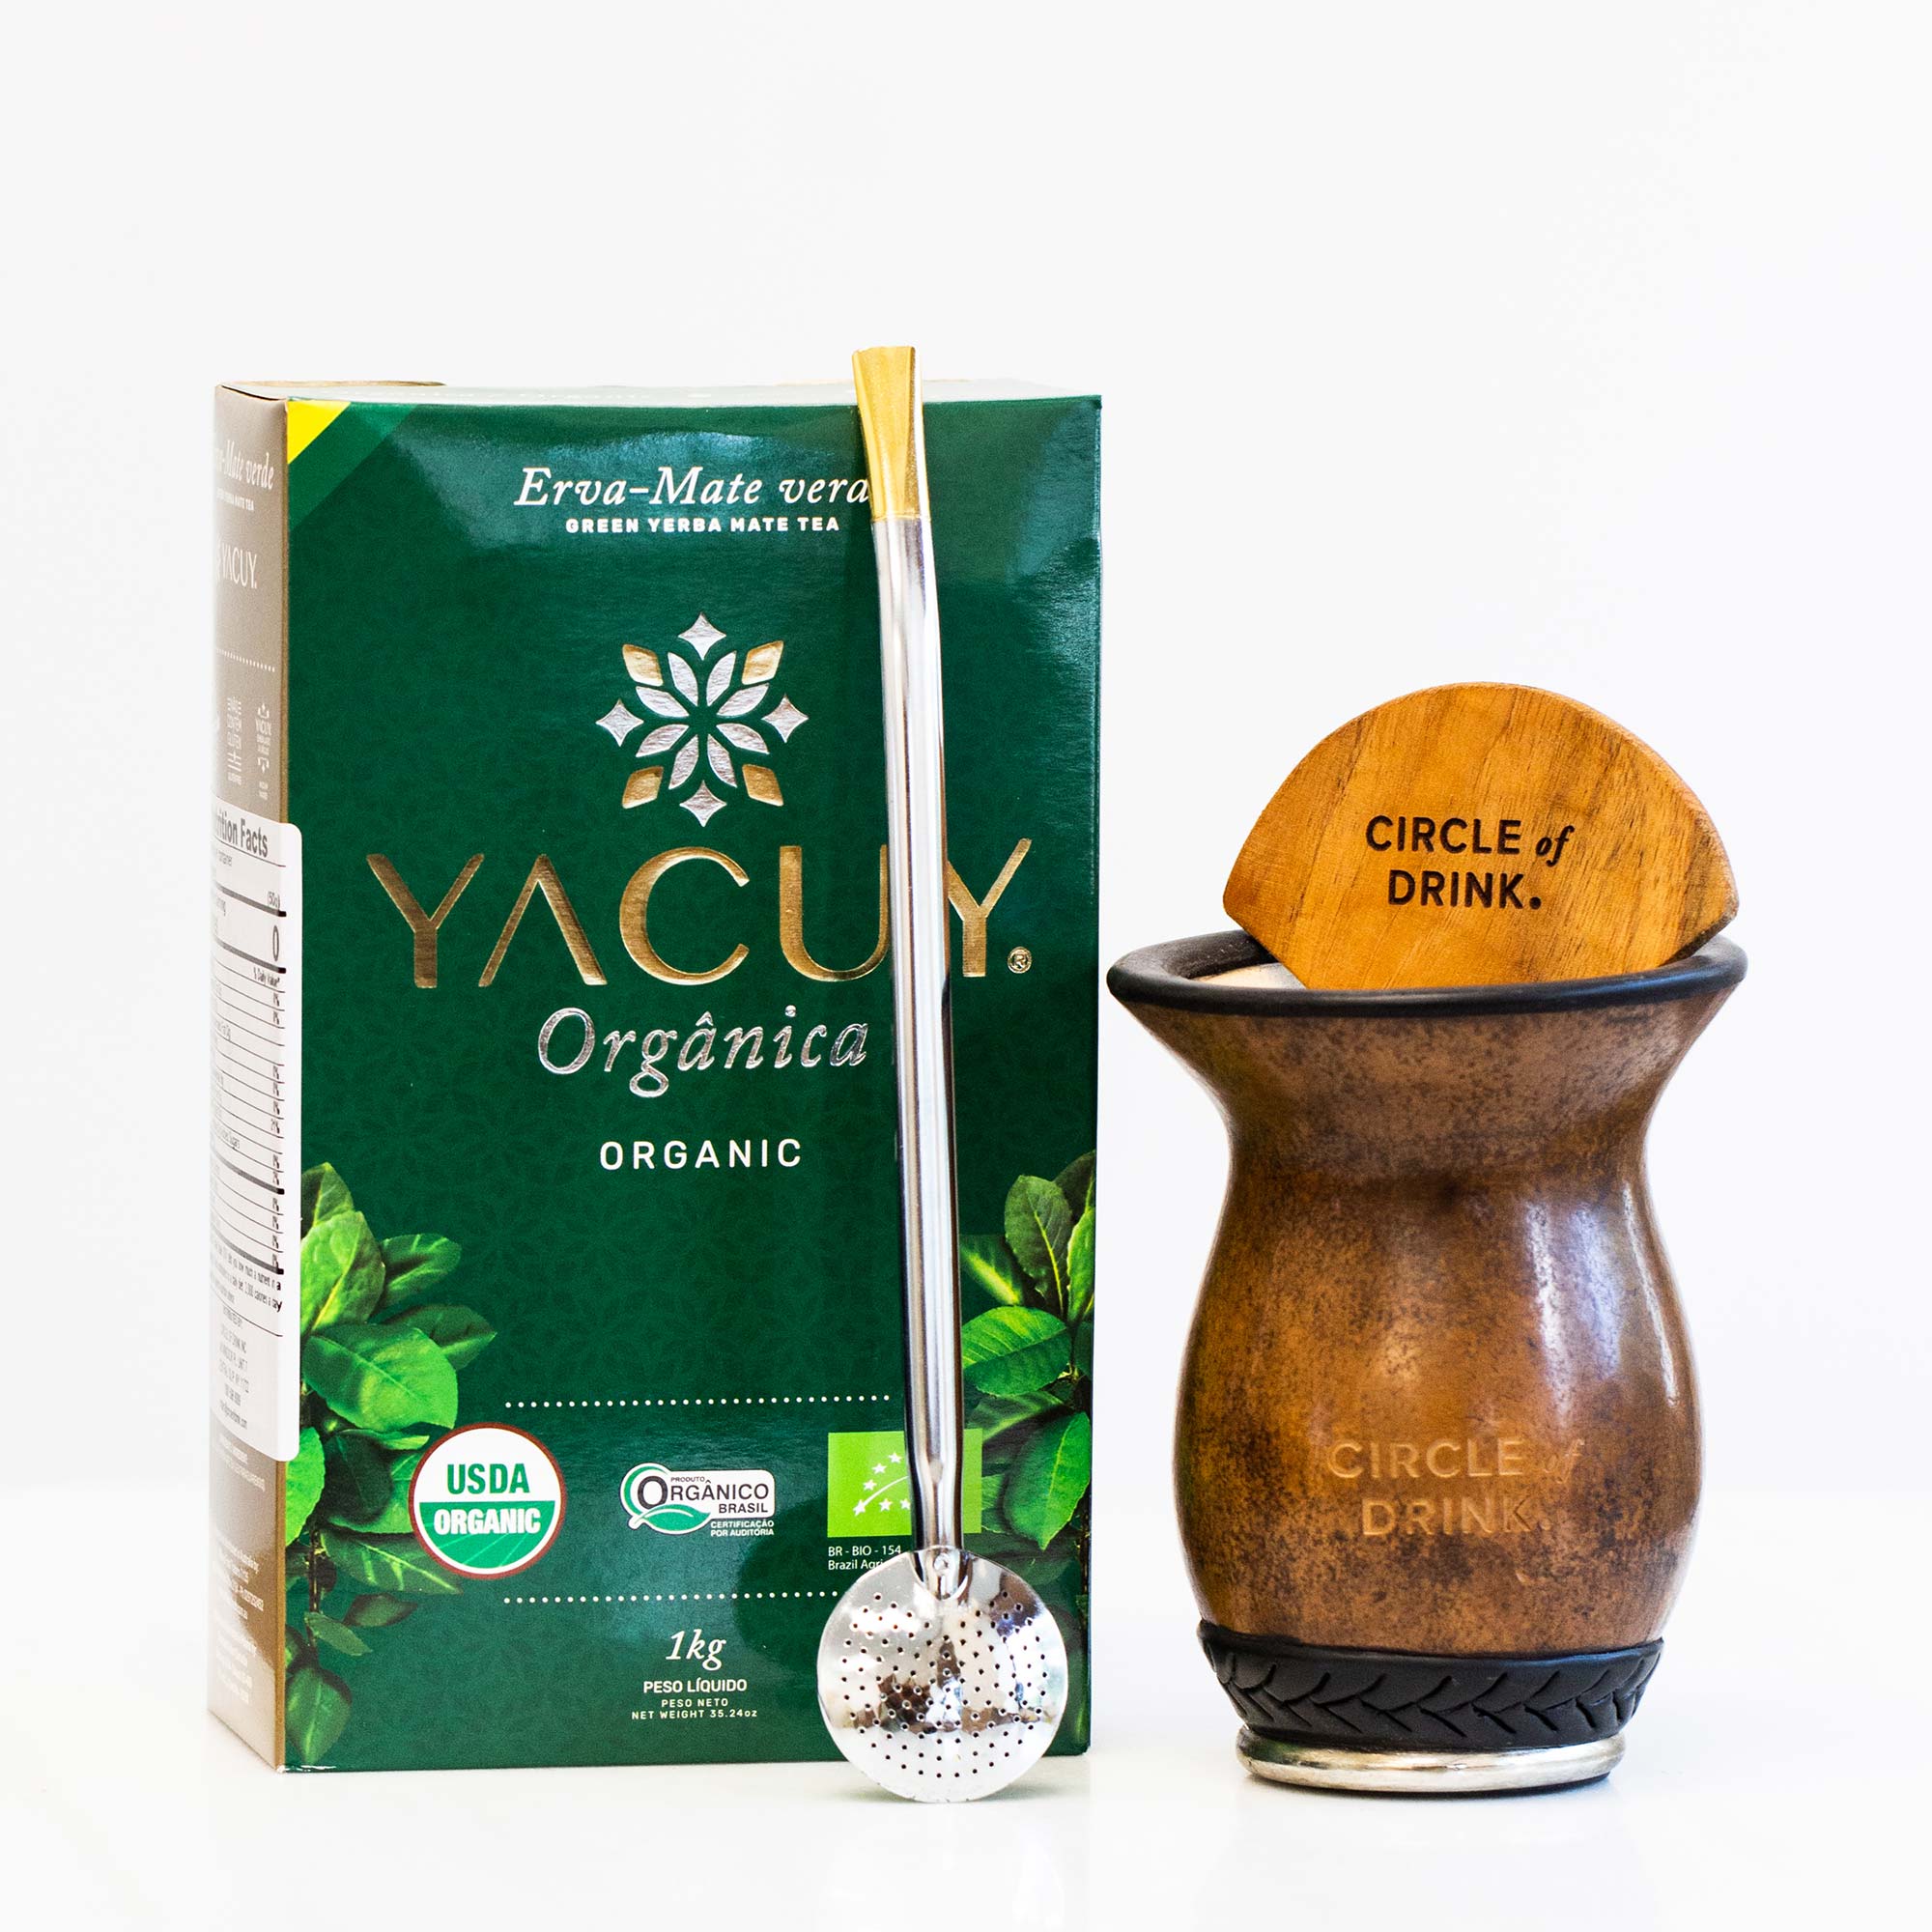 Sabado Chalice x Yacuy Organic Mate Kit